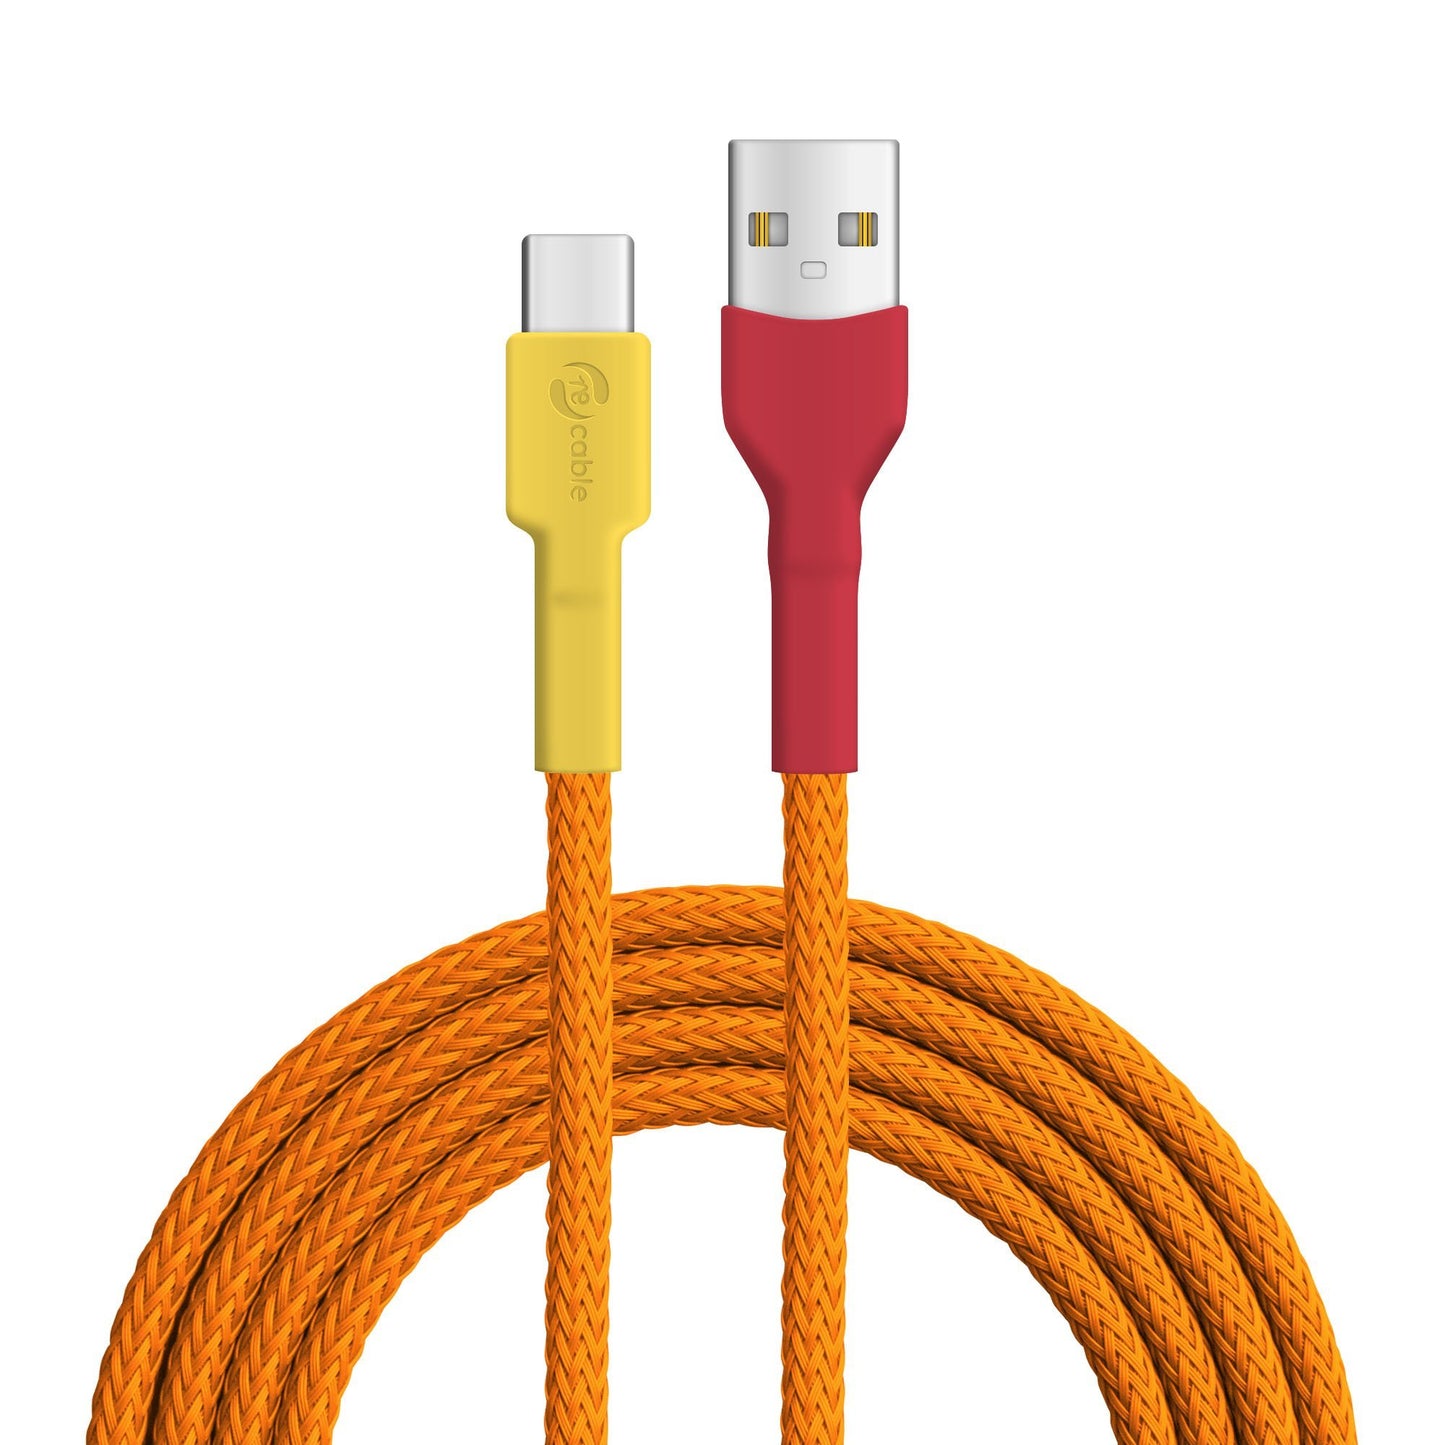 USB-Kabel, Design: Flammenlaubenvogel, Anschlüsse: USB A auf USB C 